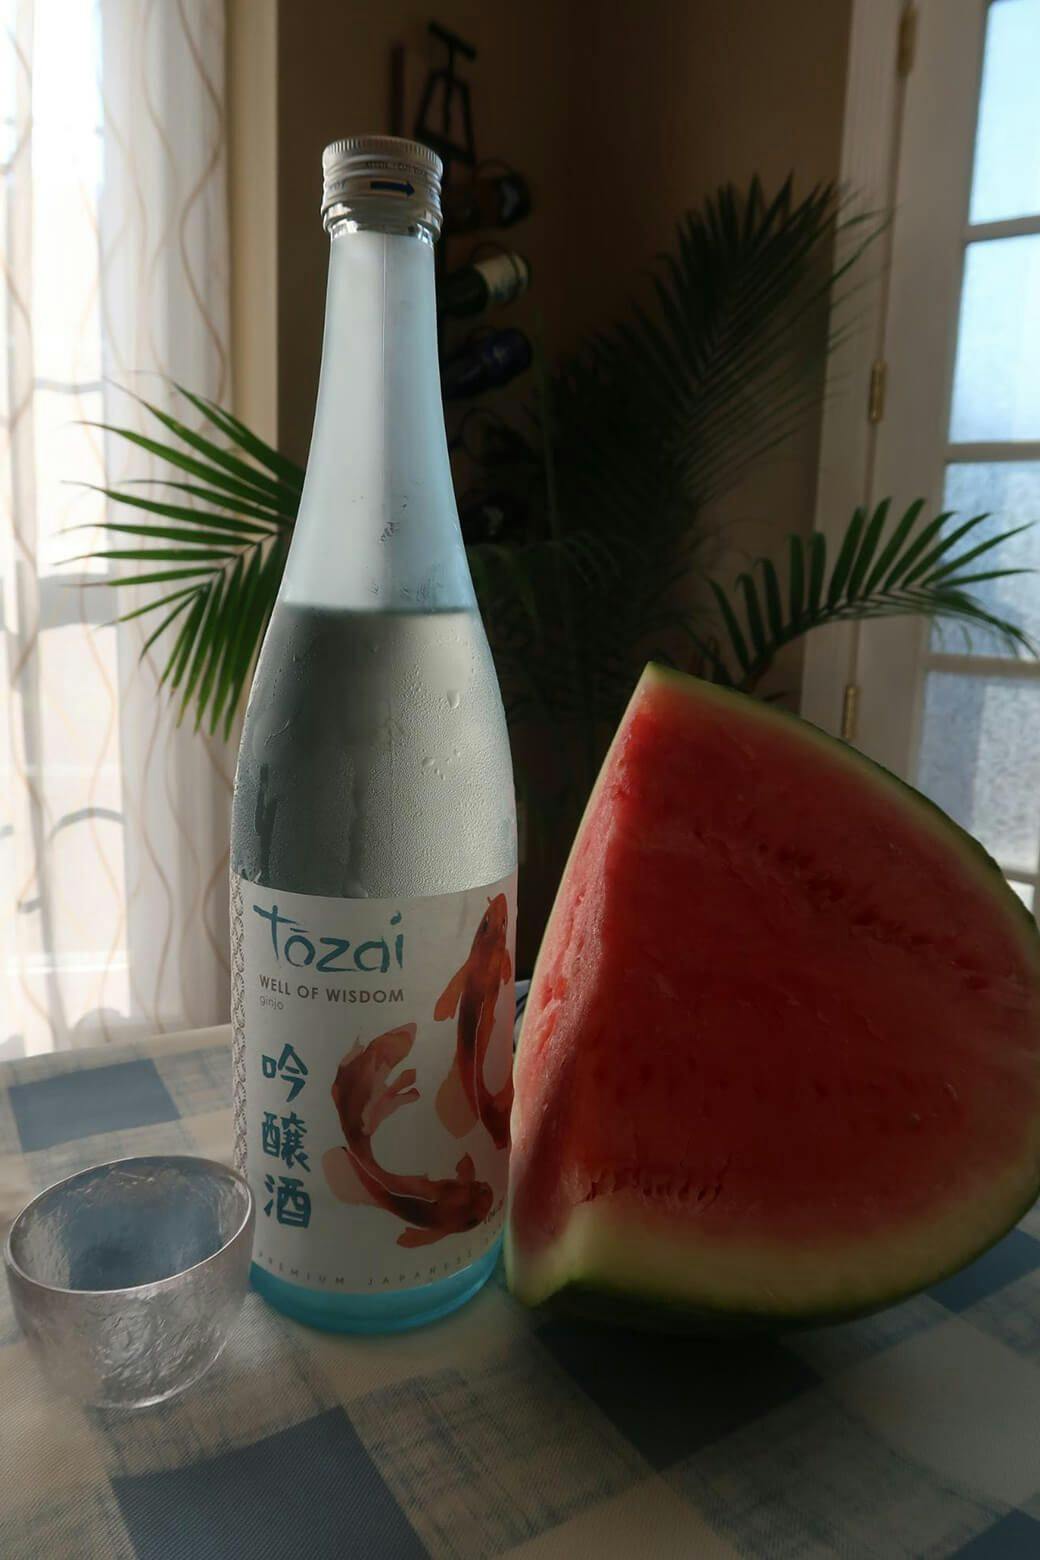 Watermelon and Tozai well of wisdom